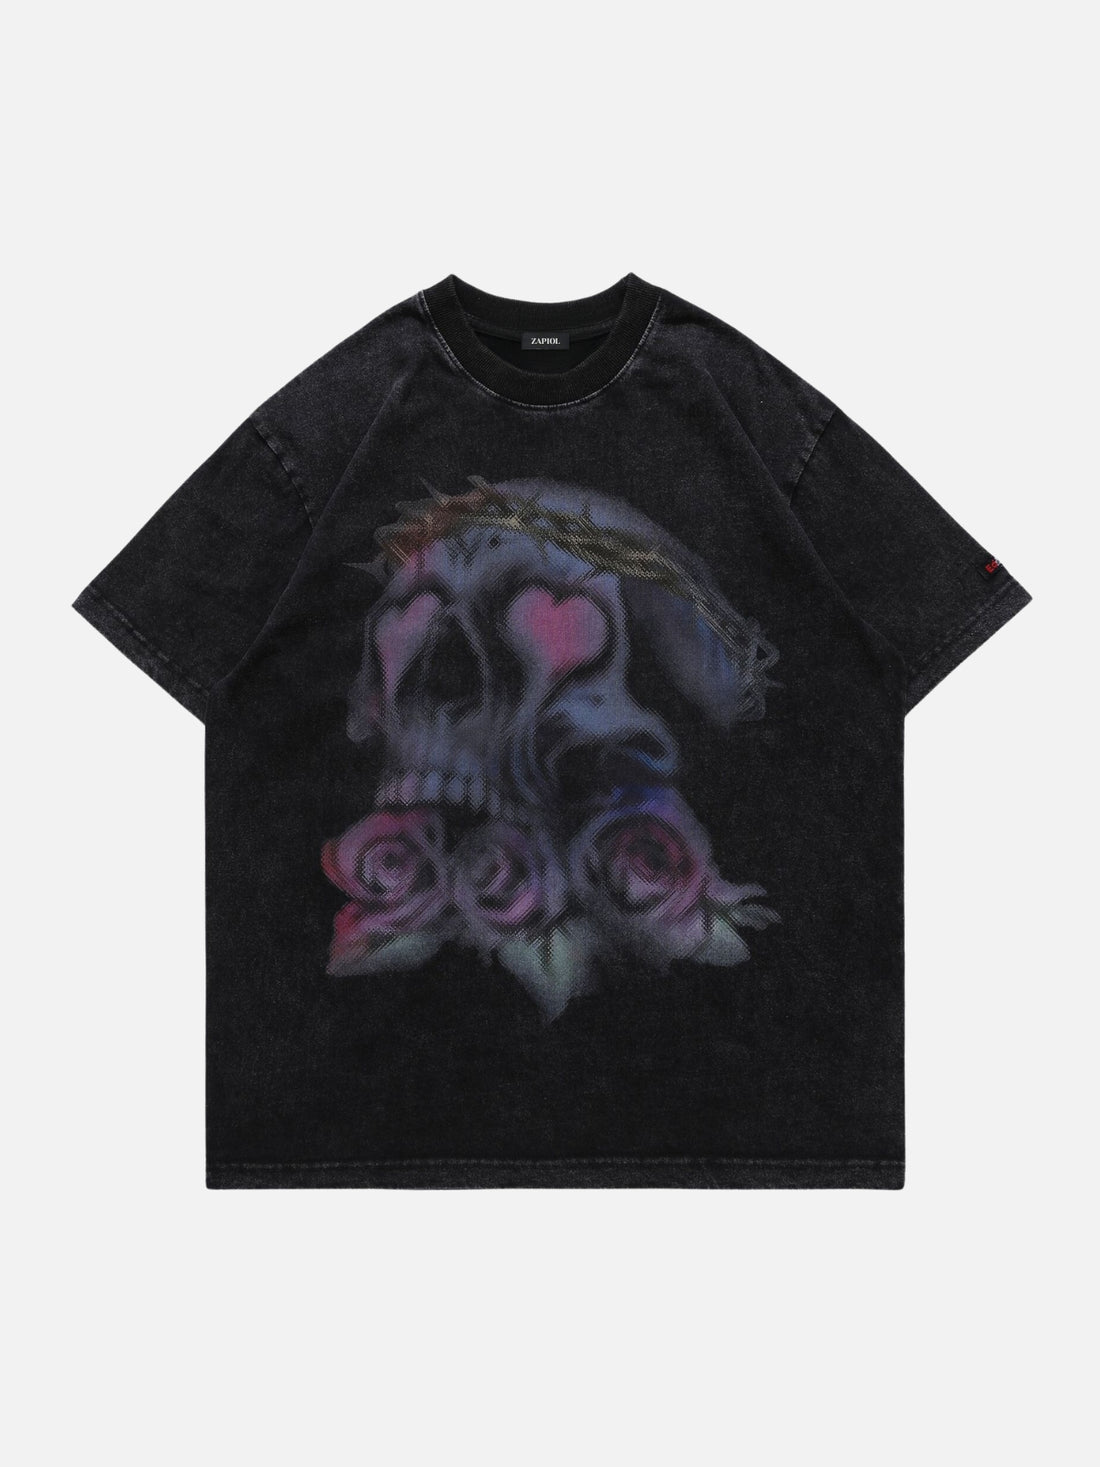 ROSESKULL - Oversized Print T-Shirt Black | Teenwear.eu